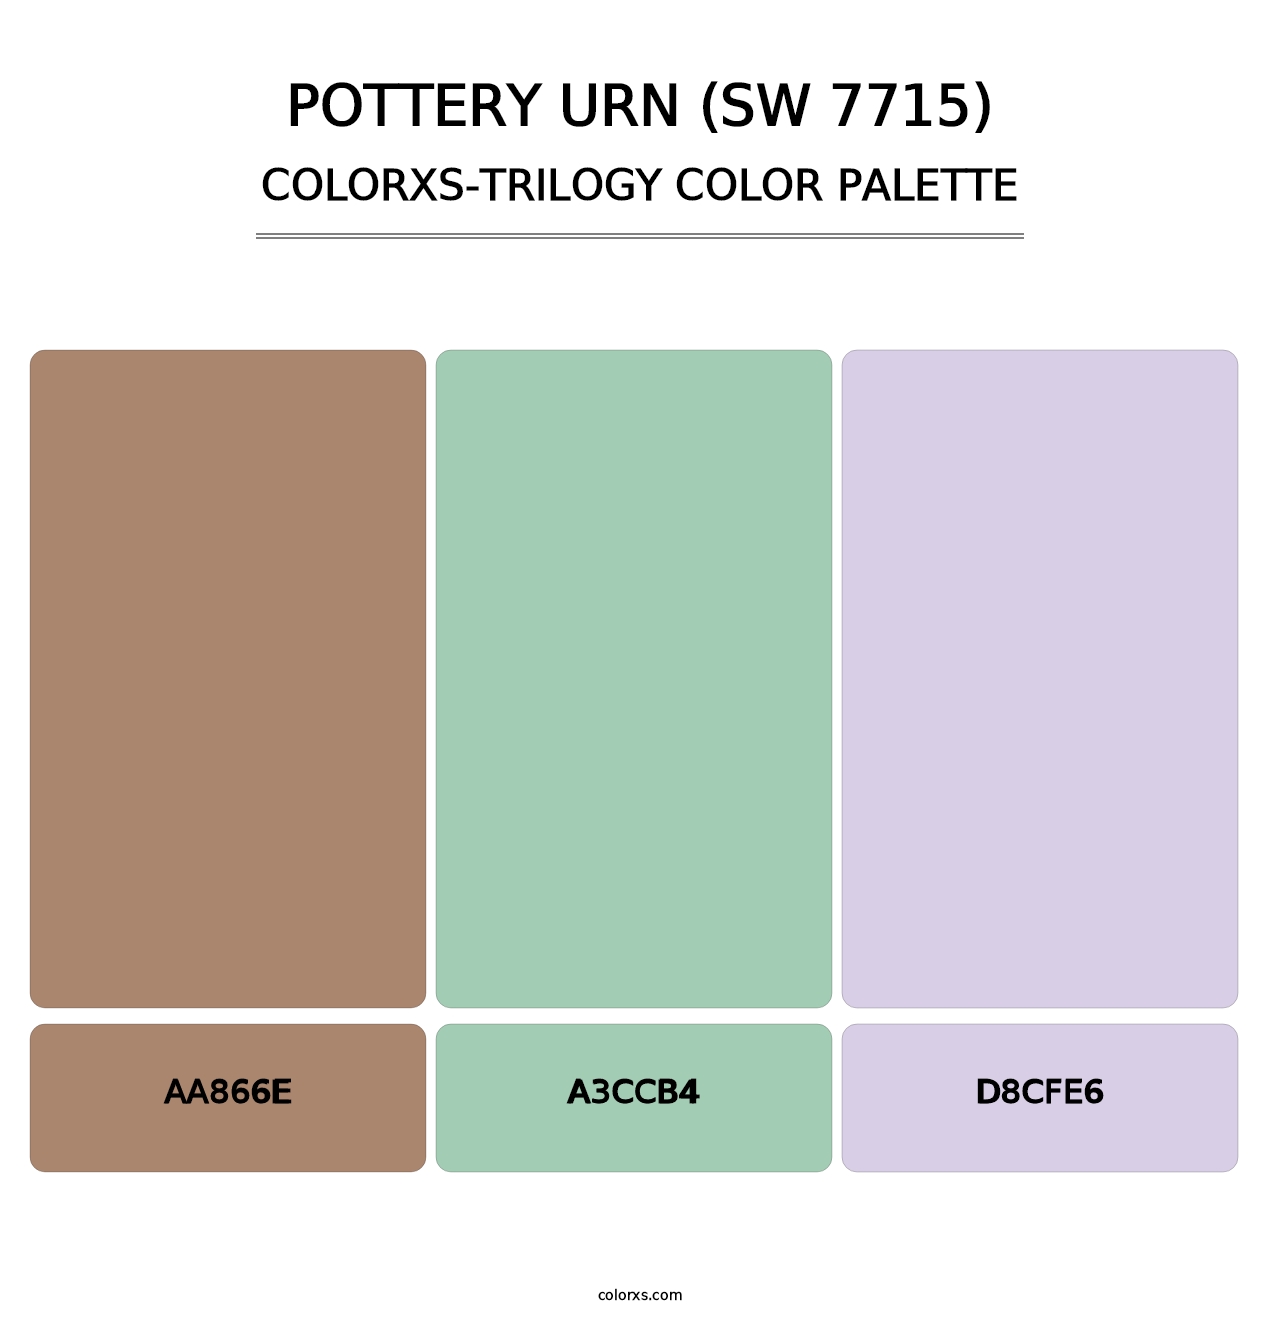 Pottery Urn (SW 7715) - Colorxs Trilogy Palette